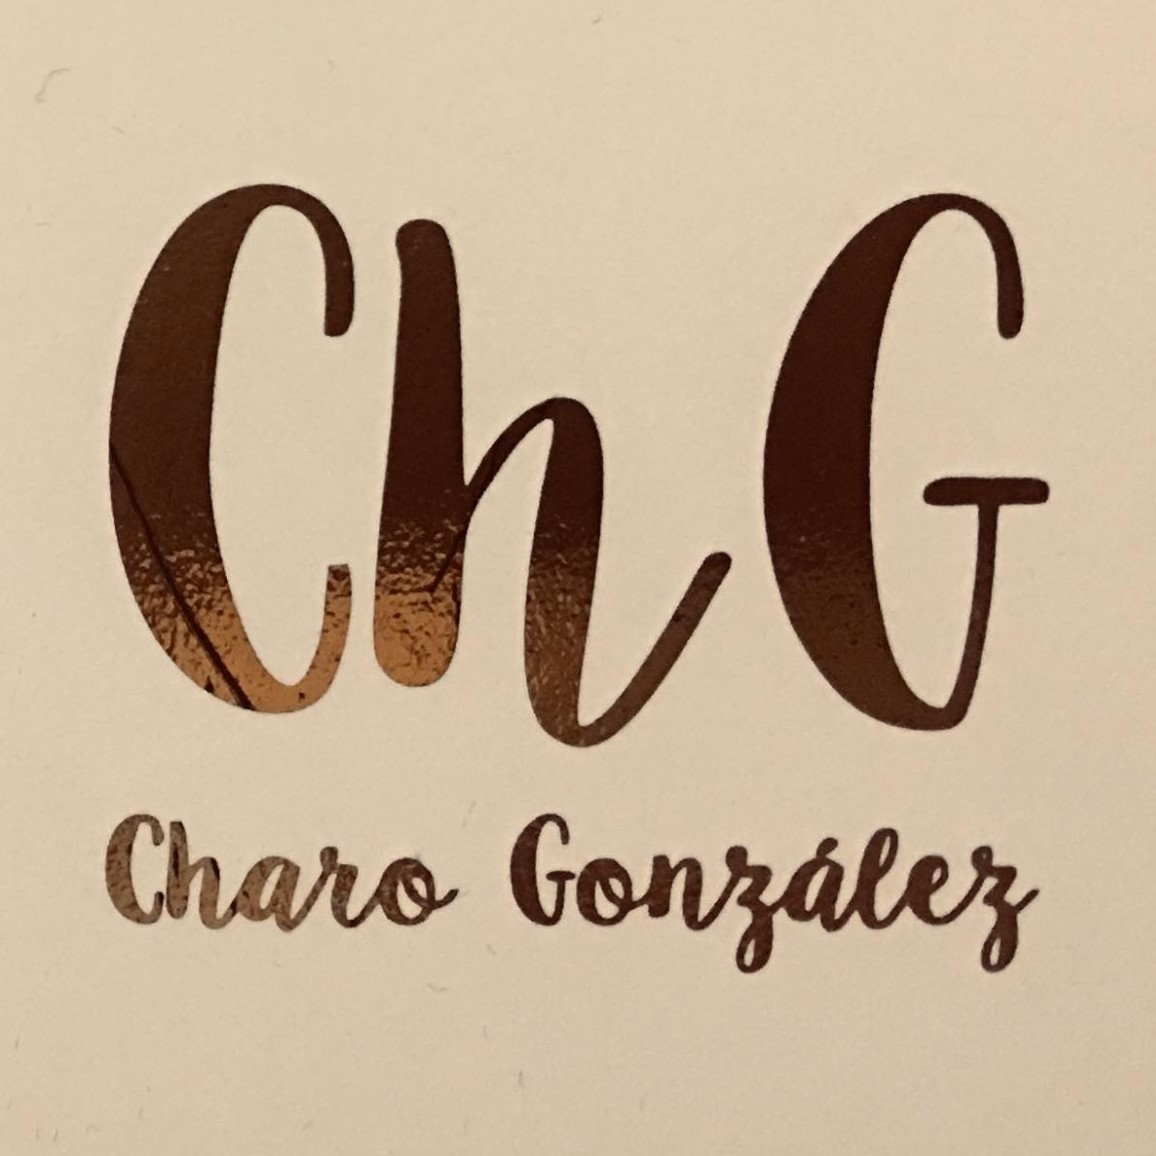 CHARO GONZALEZ